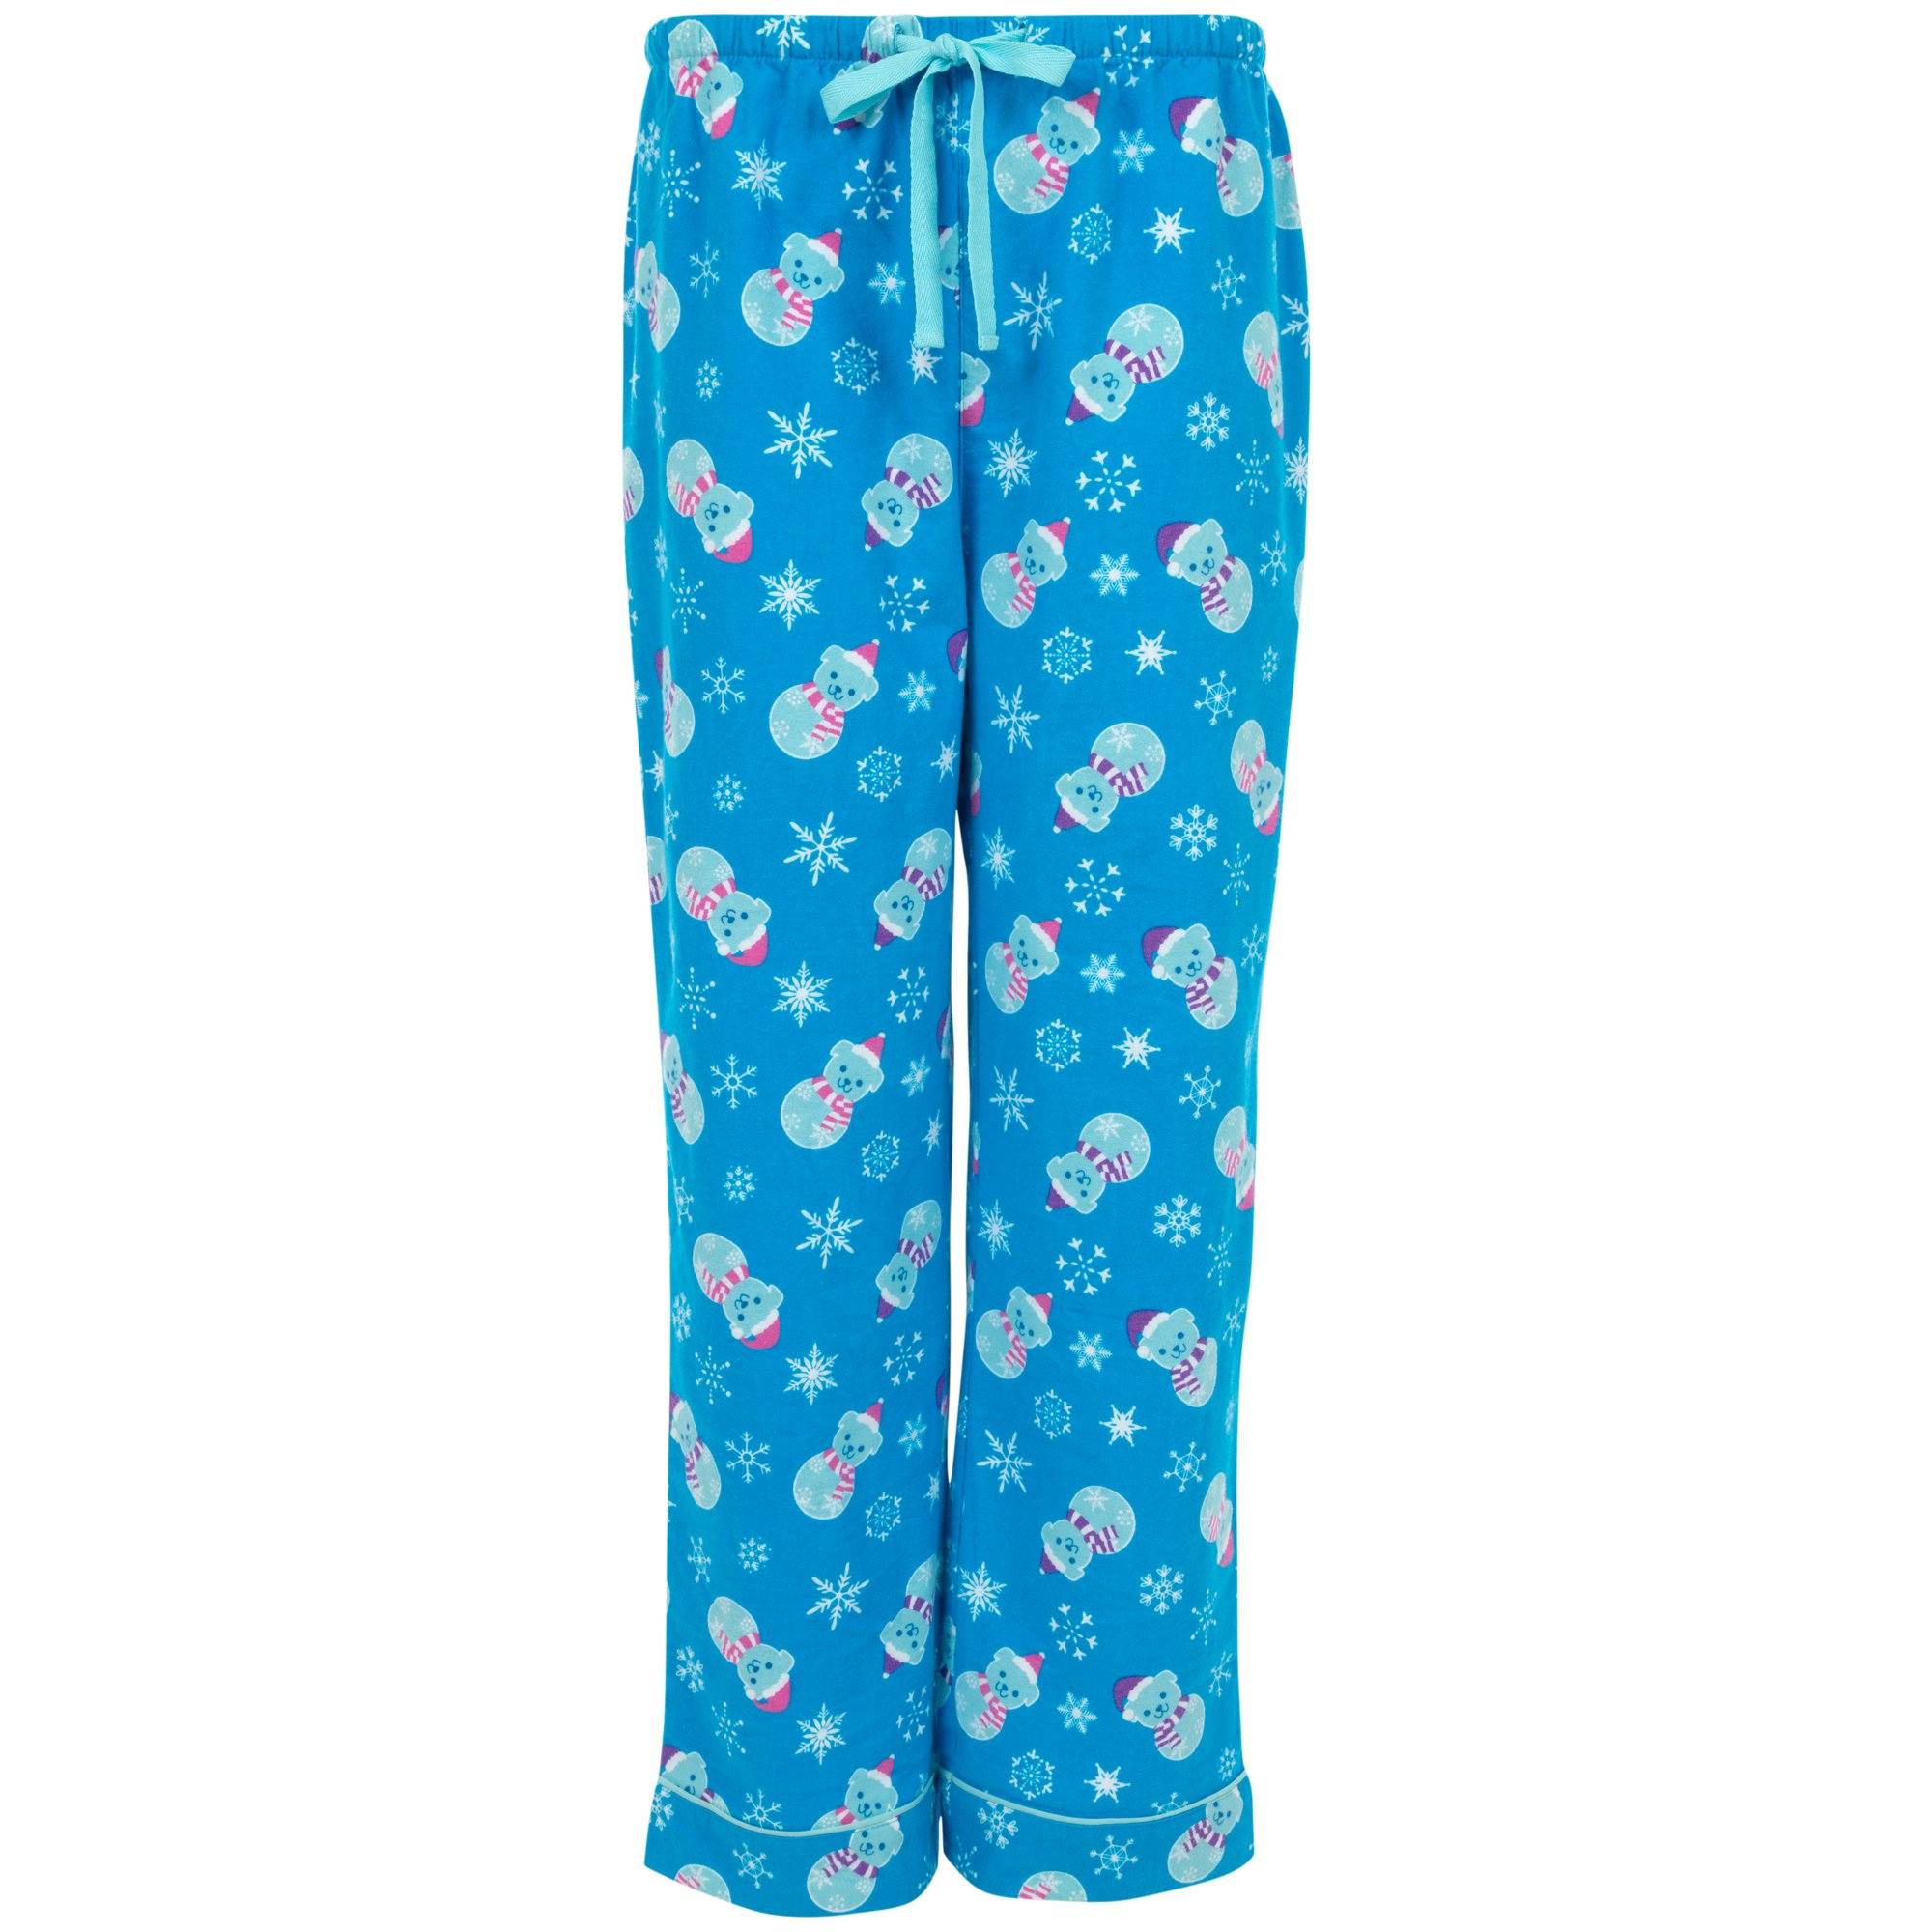 Snowman Pets Flannel Pajama Pants - Dog - S